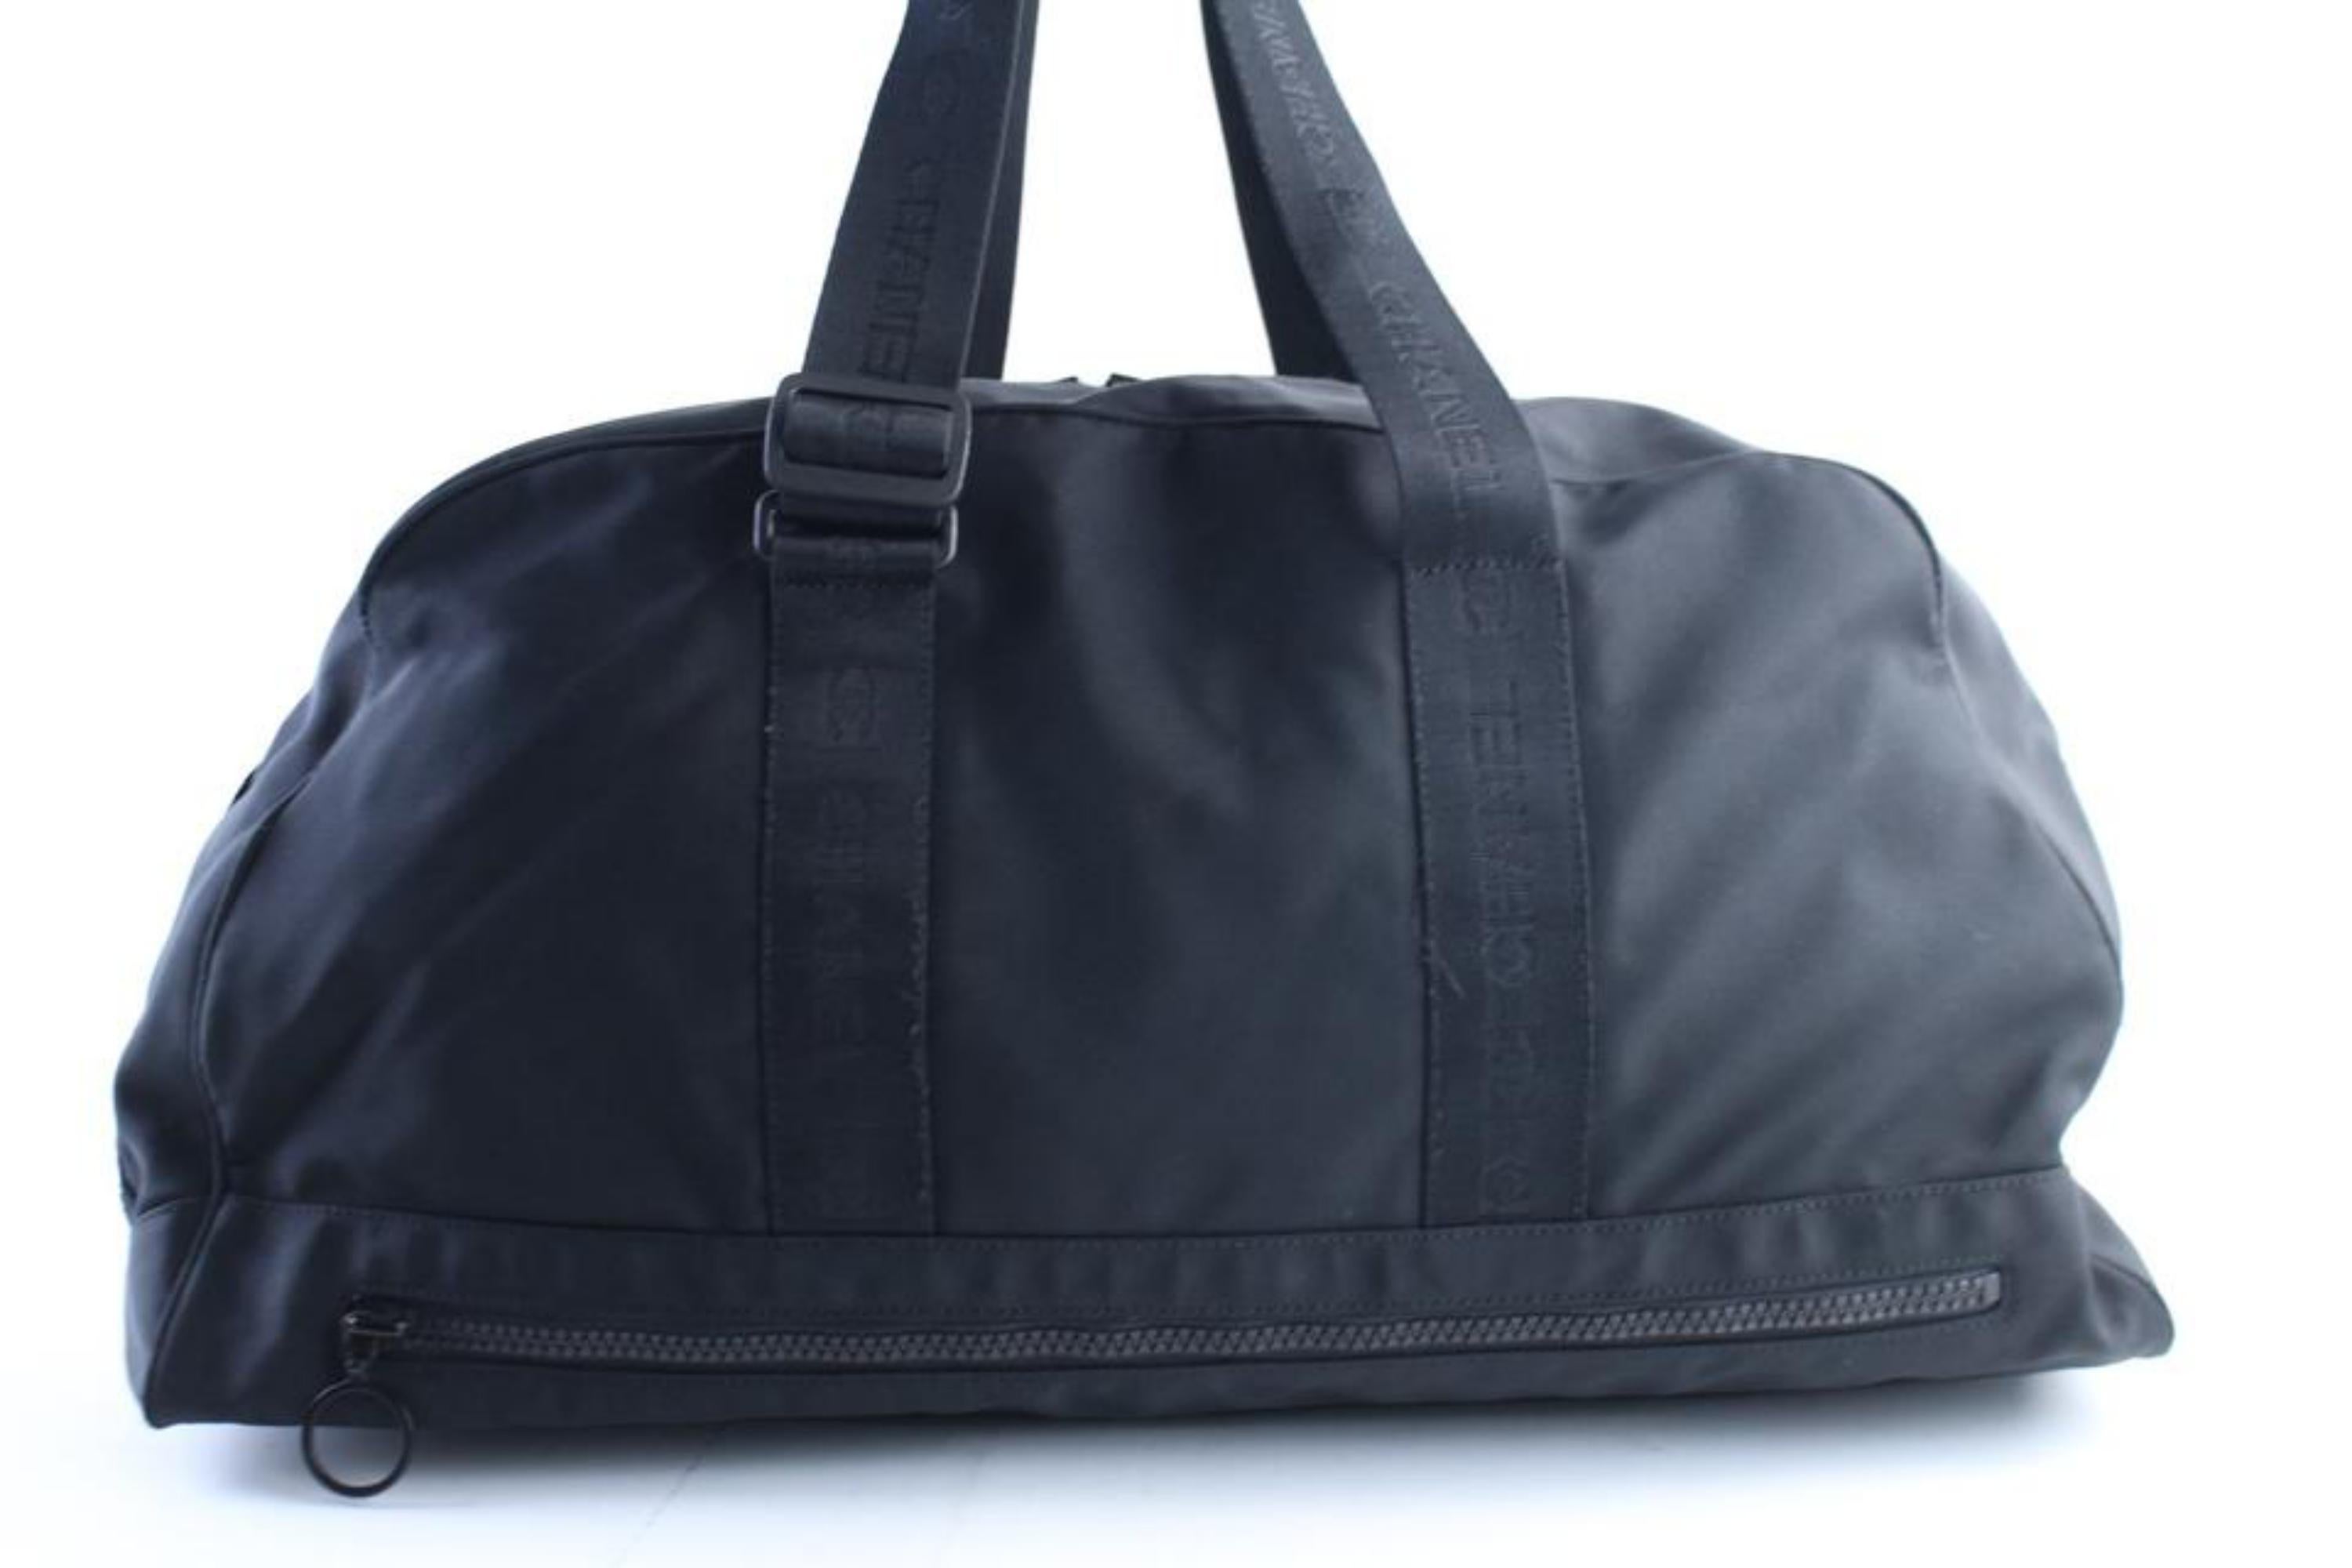 Chanel Duffle Cc Sports Boston 226424 Black Canvas Weekend/Travel Bag For Sale 4